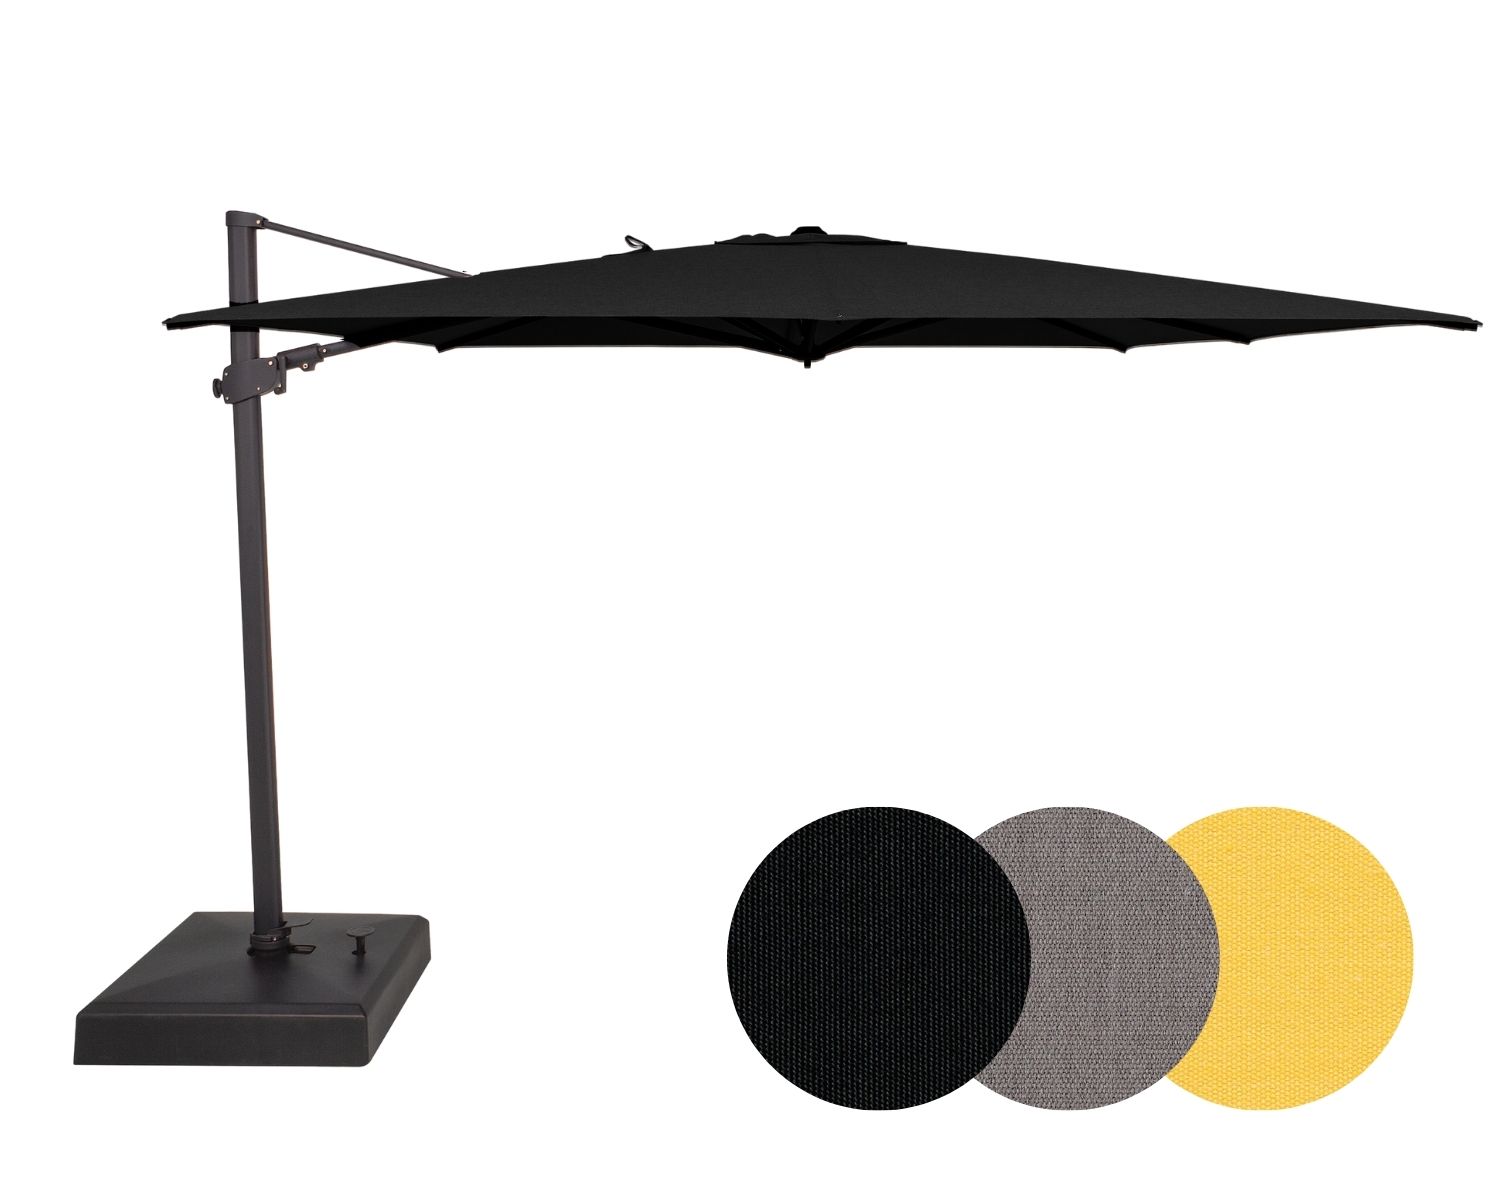 Auto-Tilt Square Cantilever Patio Umbrella - 10'